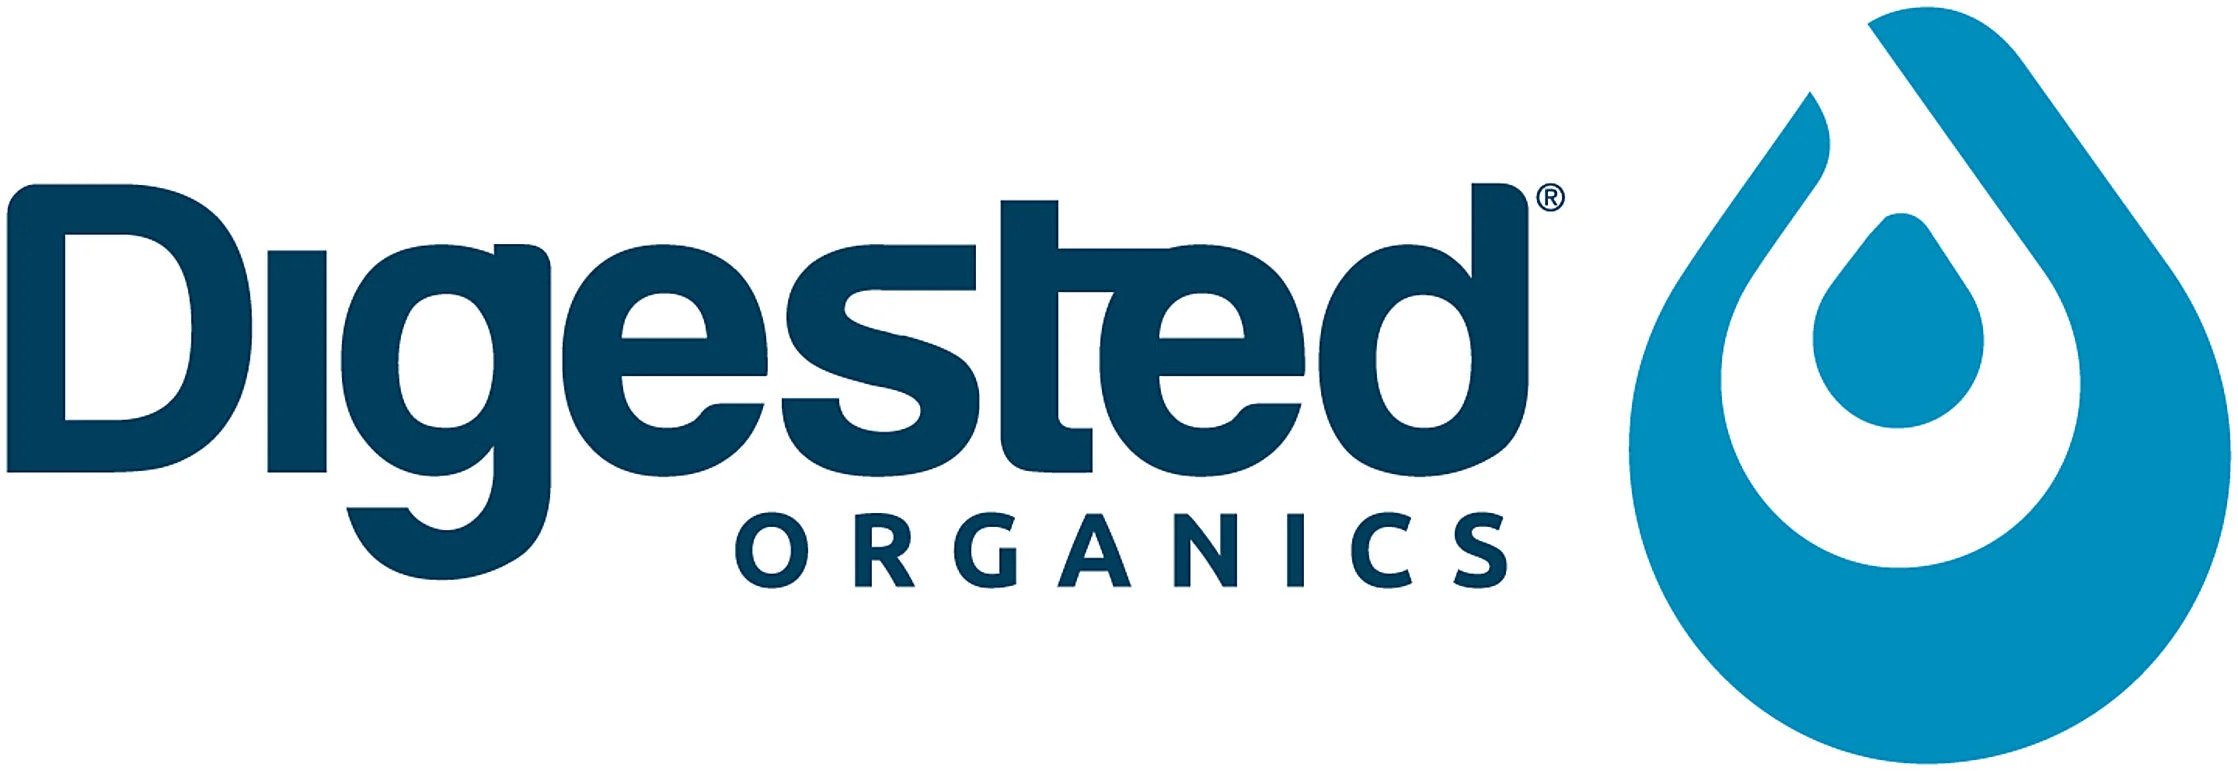 digested-organics-logo